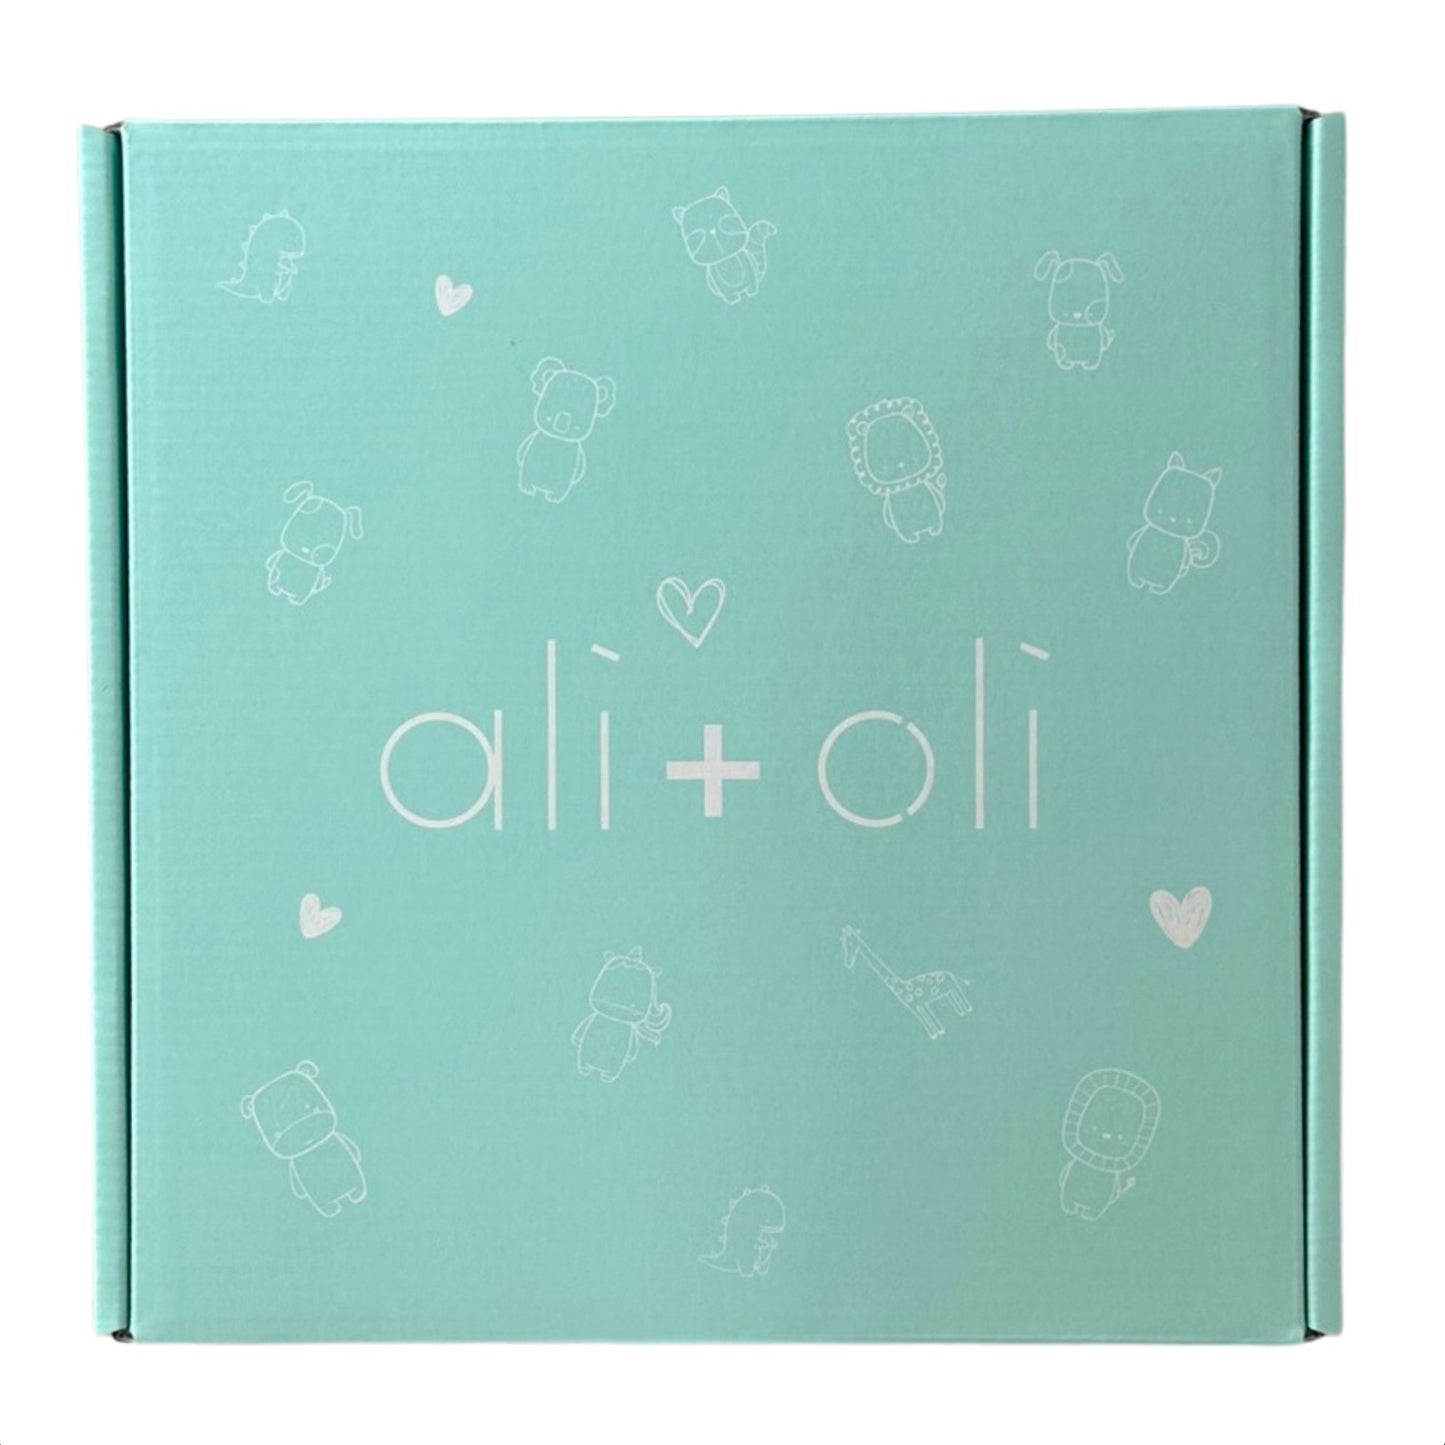 Ali+Oli Baby Gift Box - Pretty in Pink